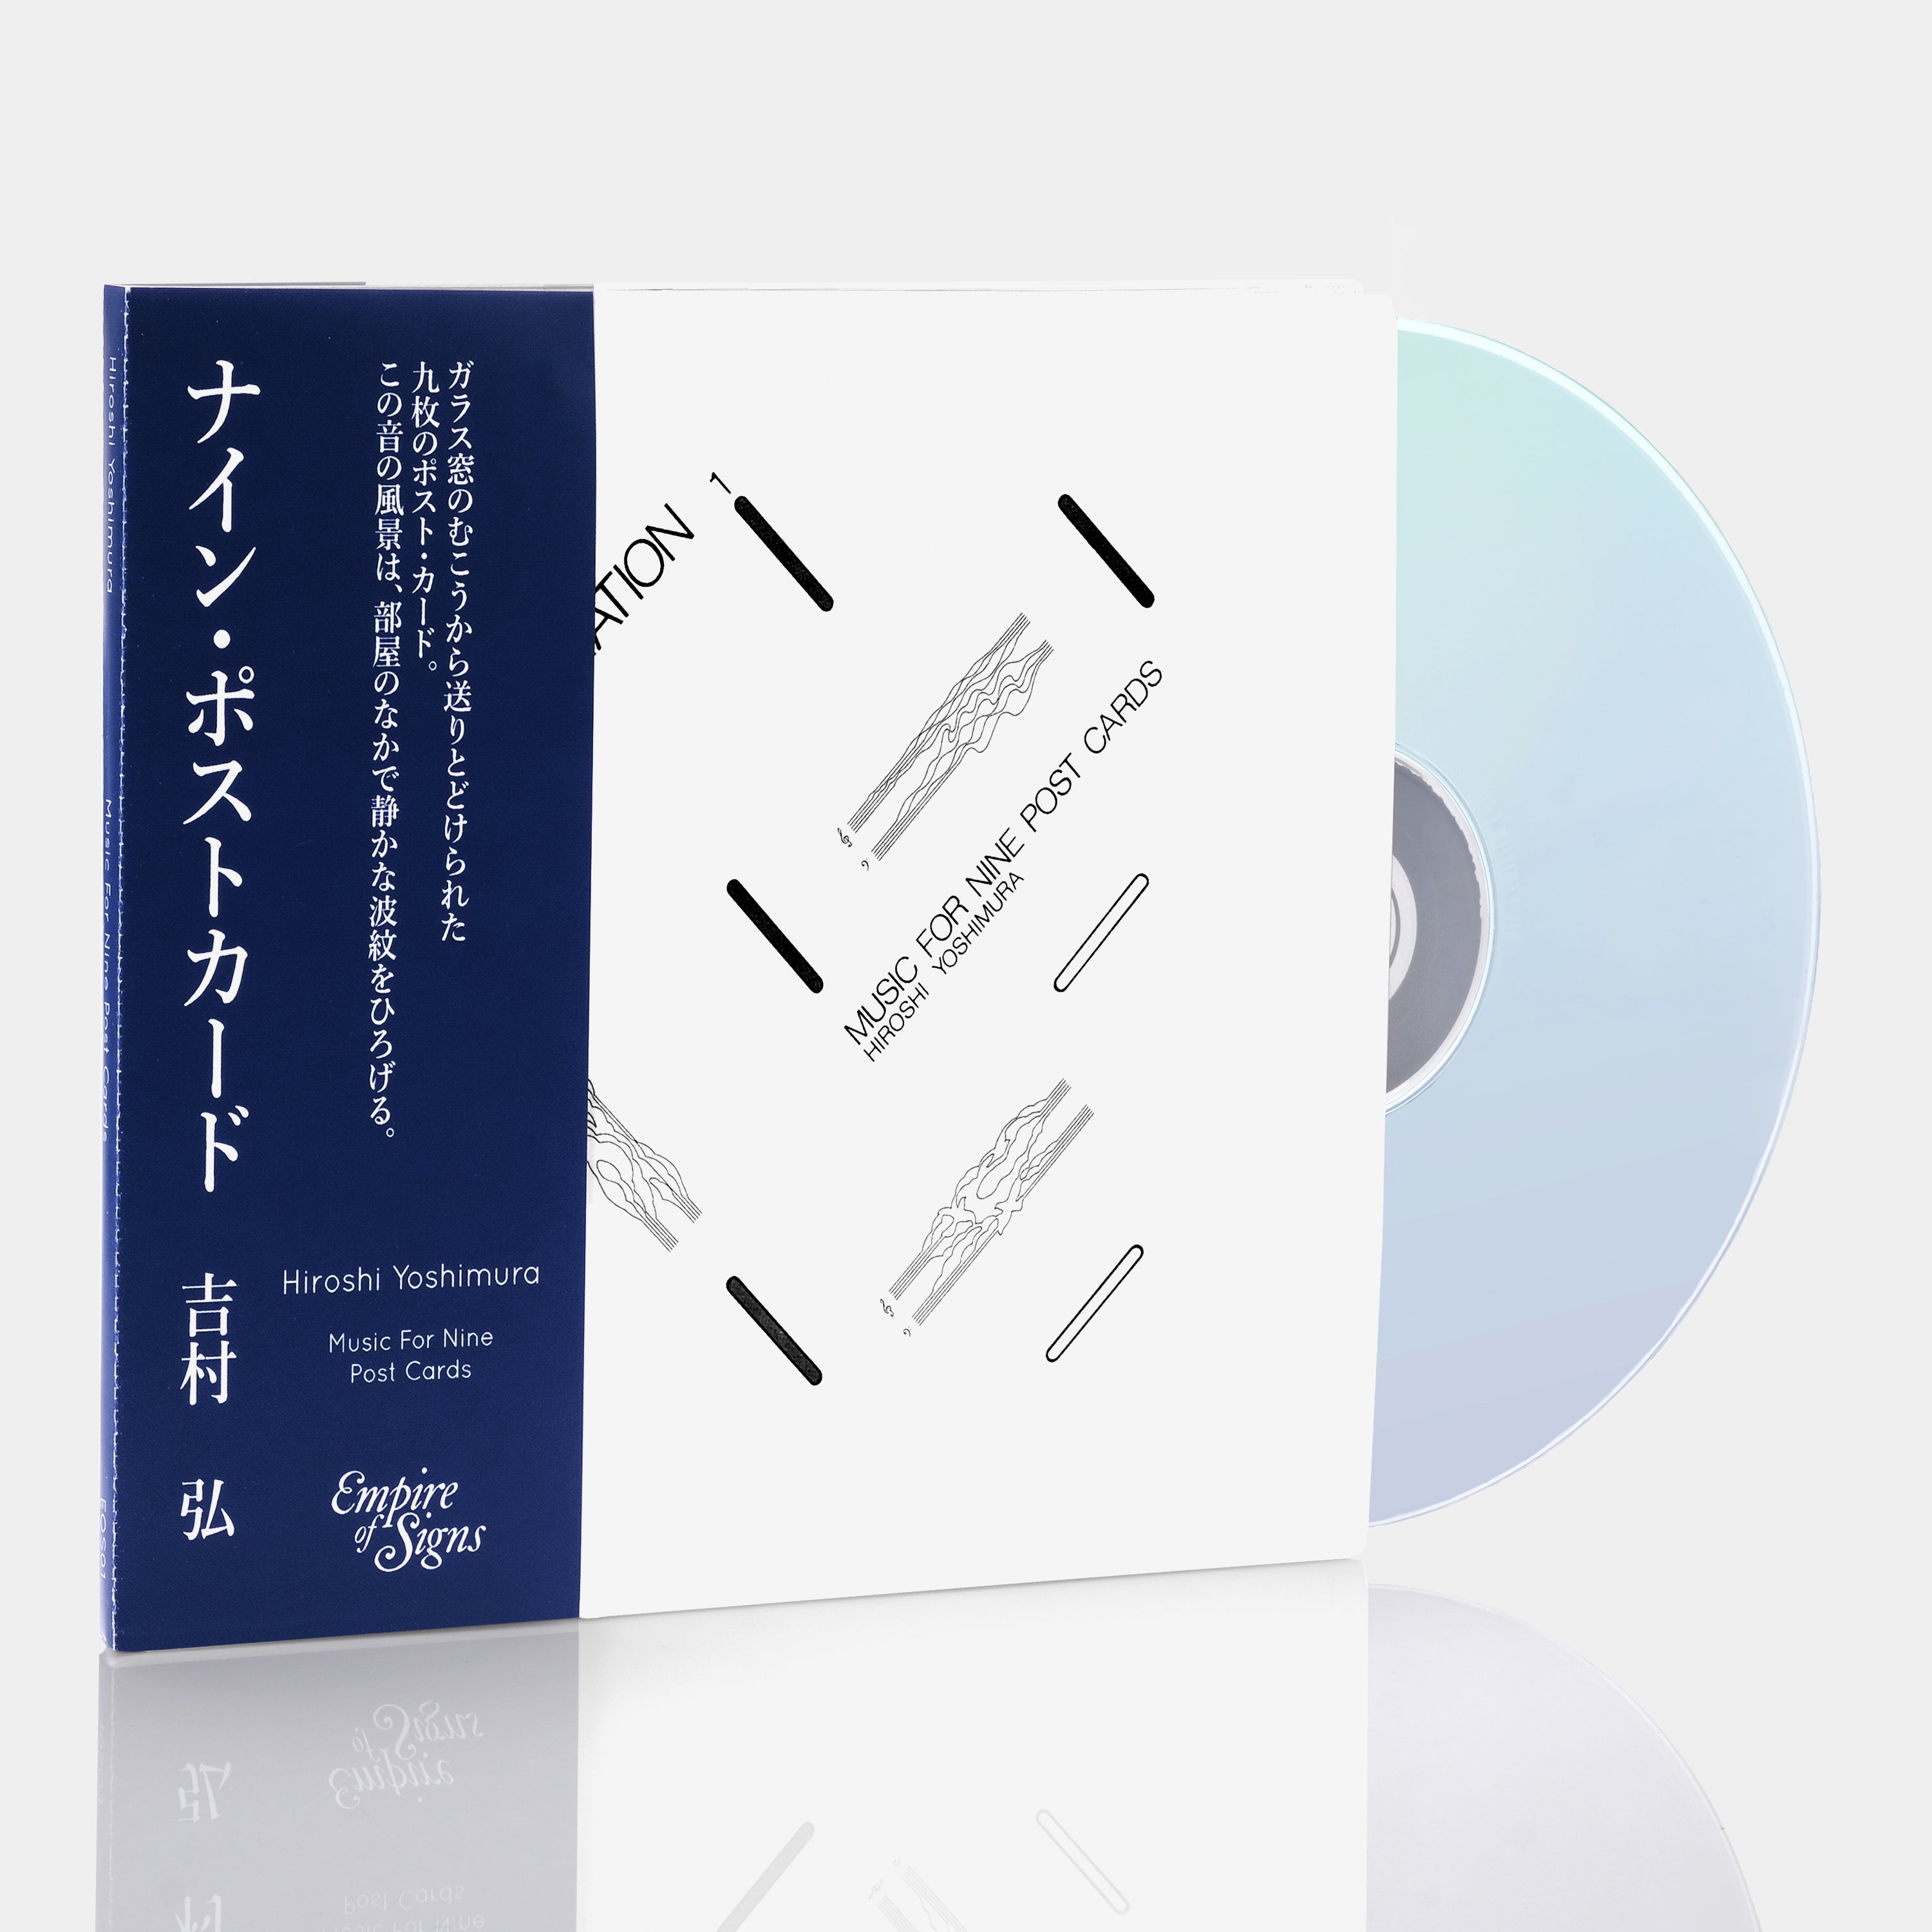 Hiroshi Yoshimura - Music For Nine Post Cards CD